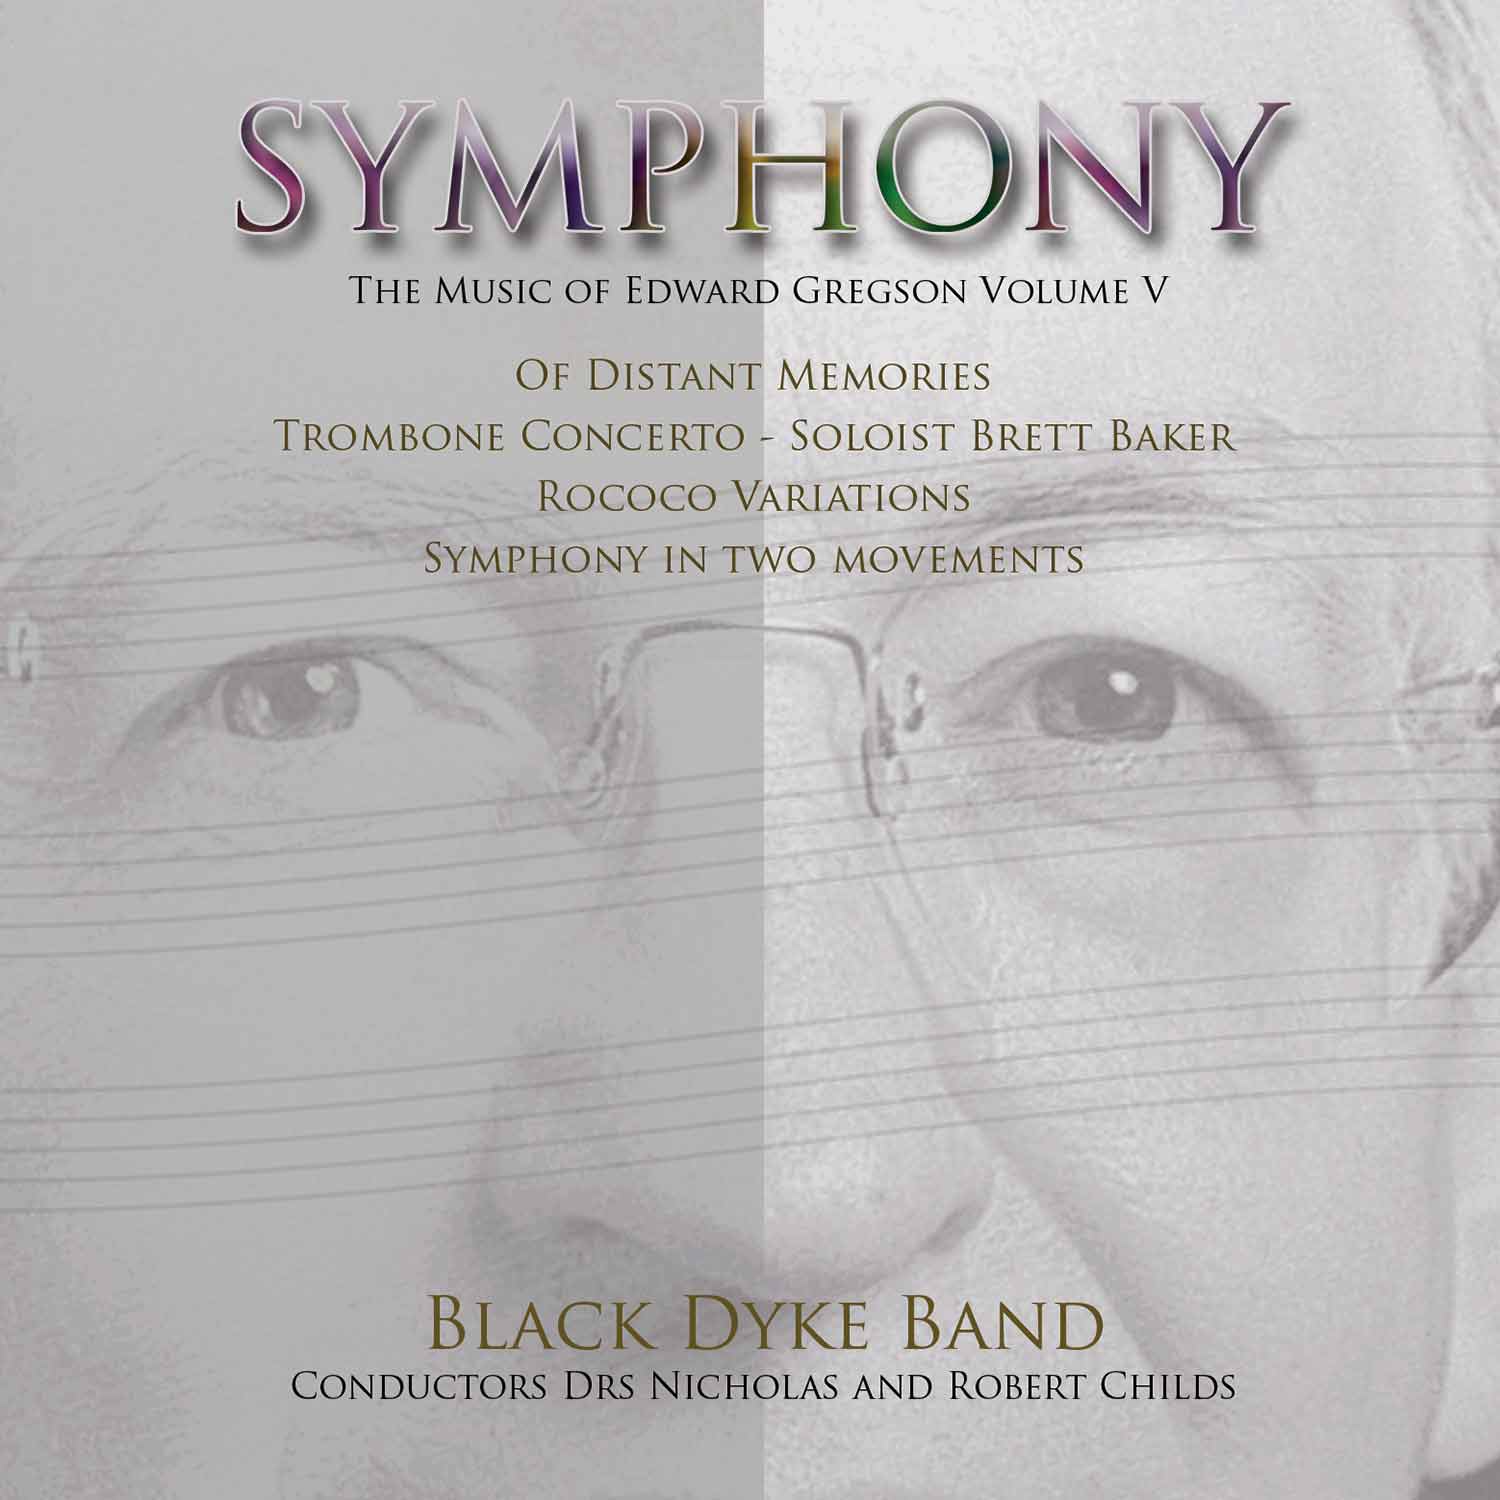 Symphony - The Music of Edward Gregson Vol. V - CD